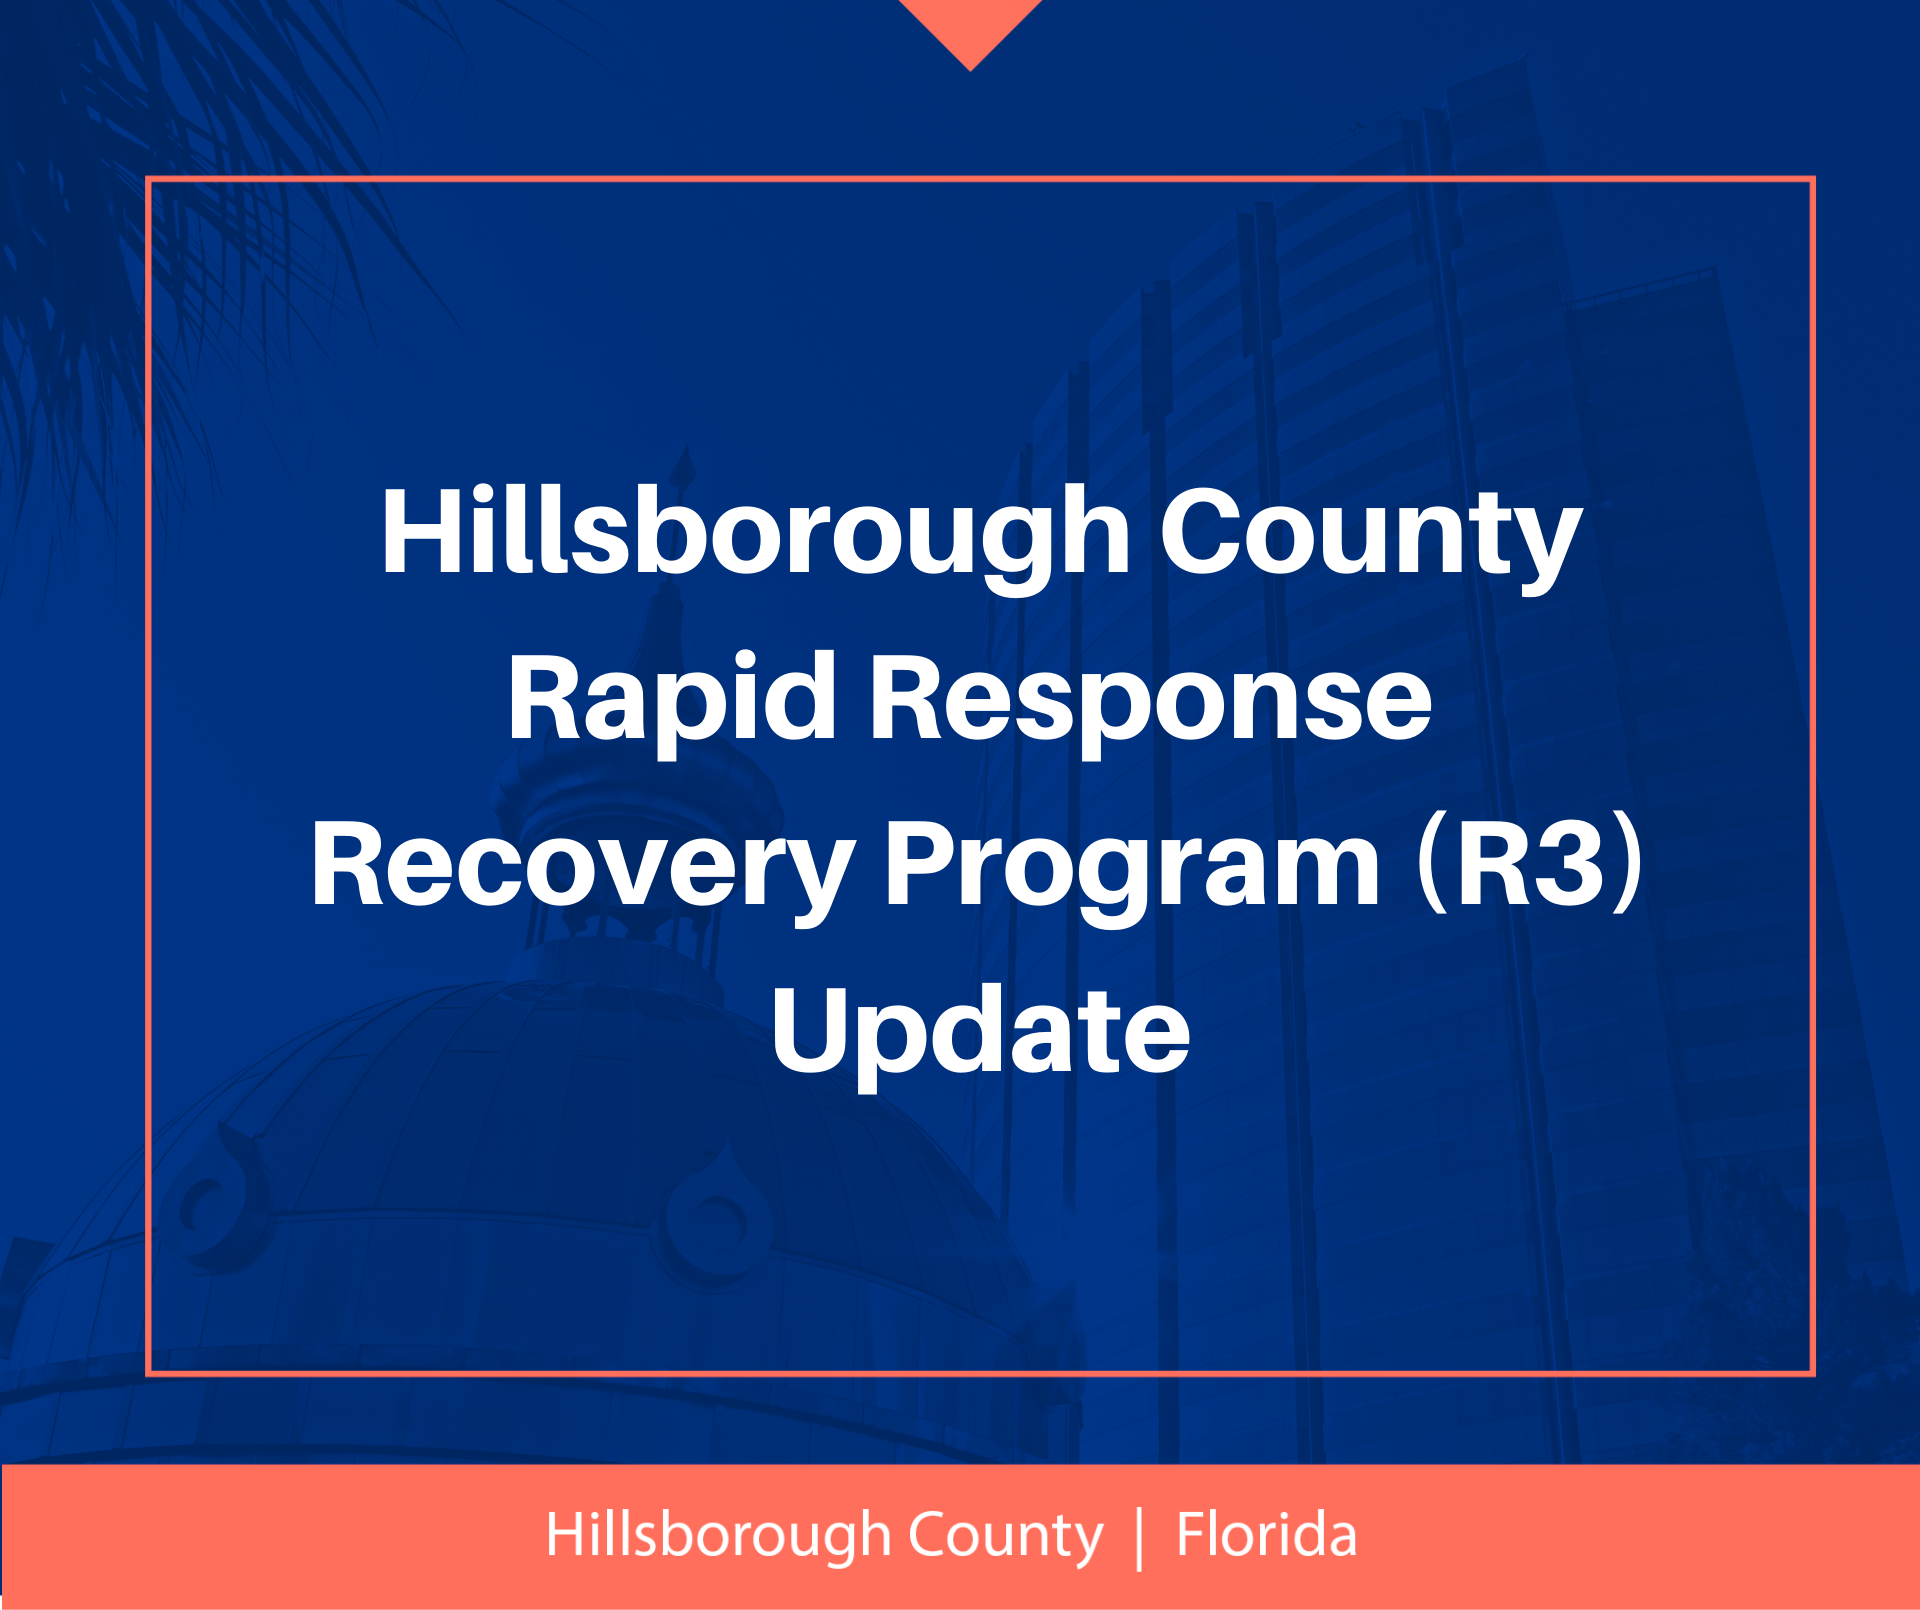 Hillsborough County Rapid Response Recovery R3 Program Update 